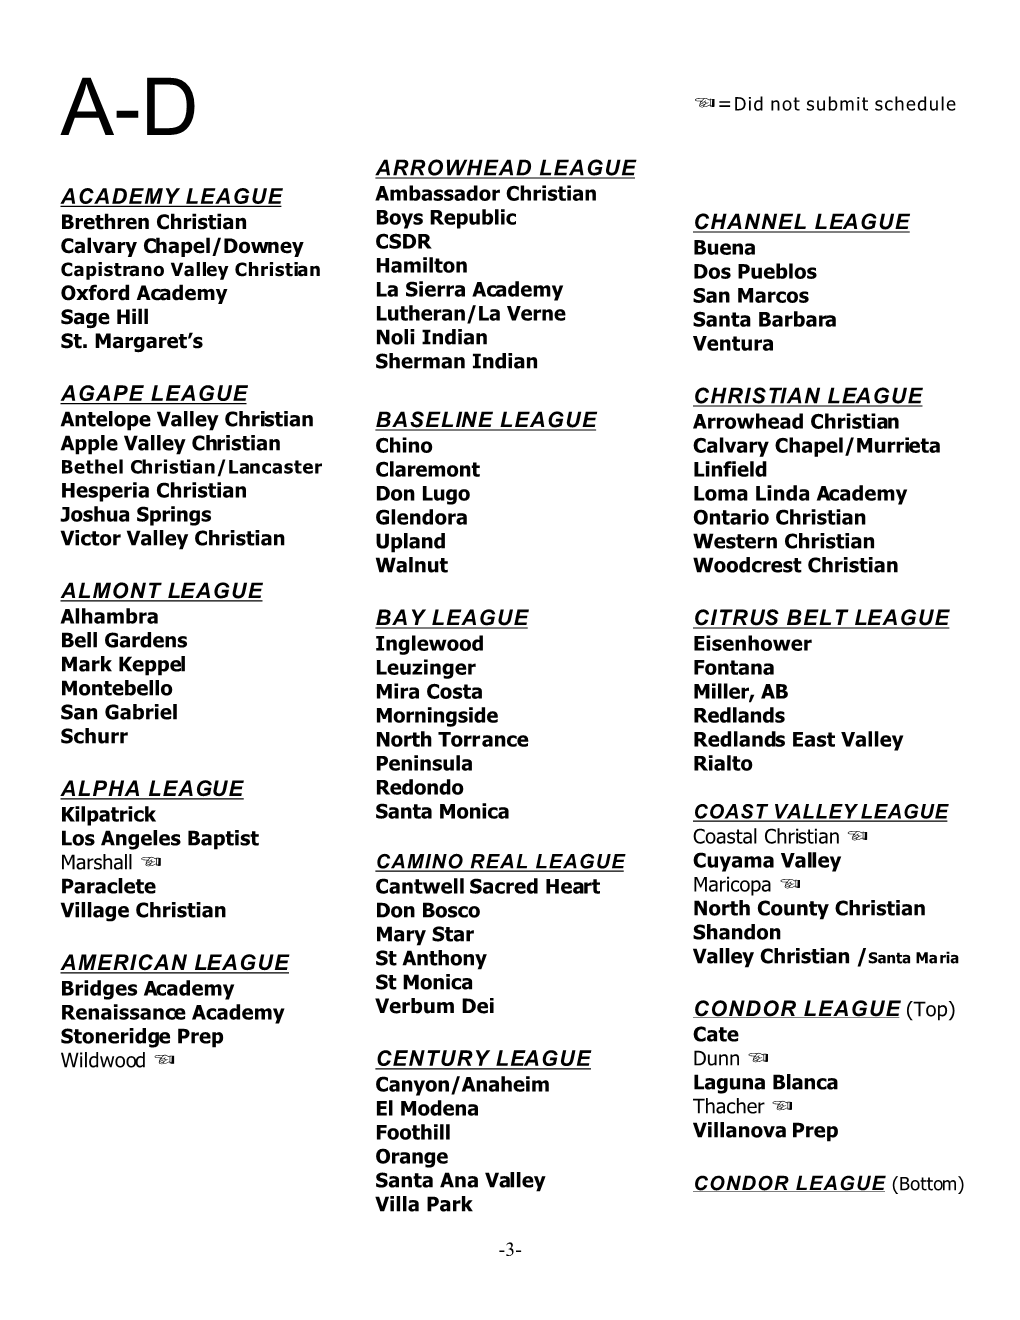 Academy League Agape League Almont League Alpha